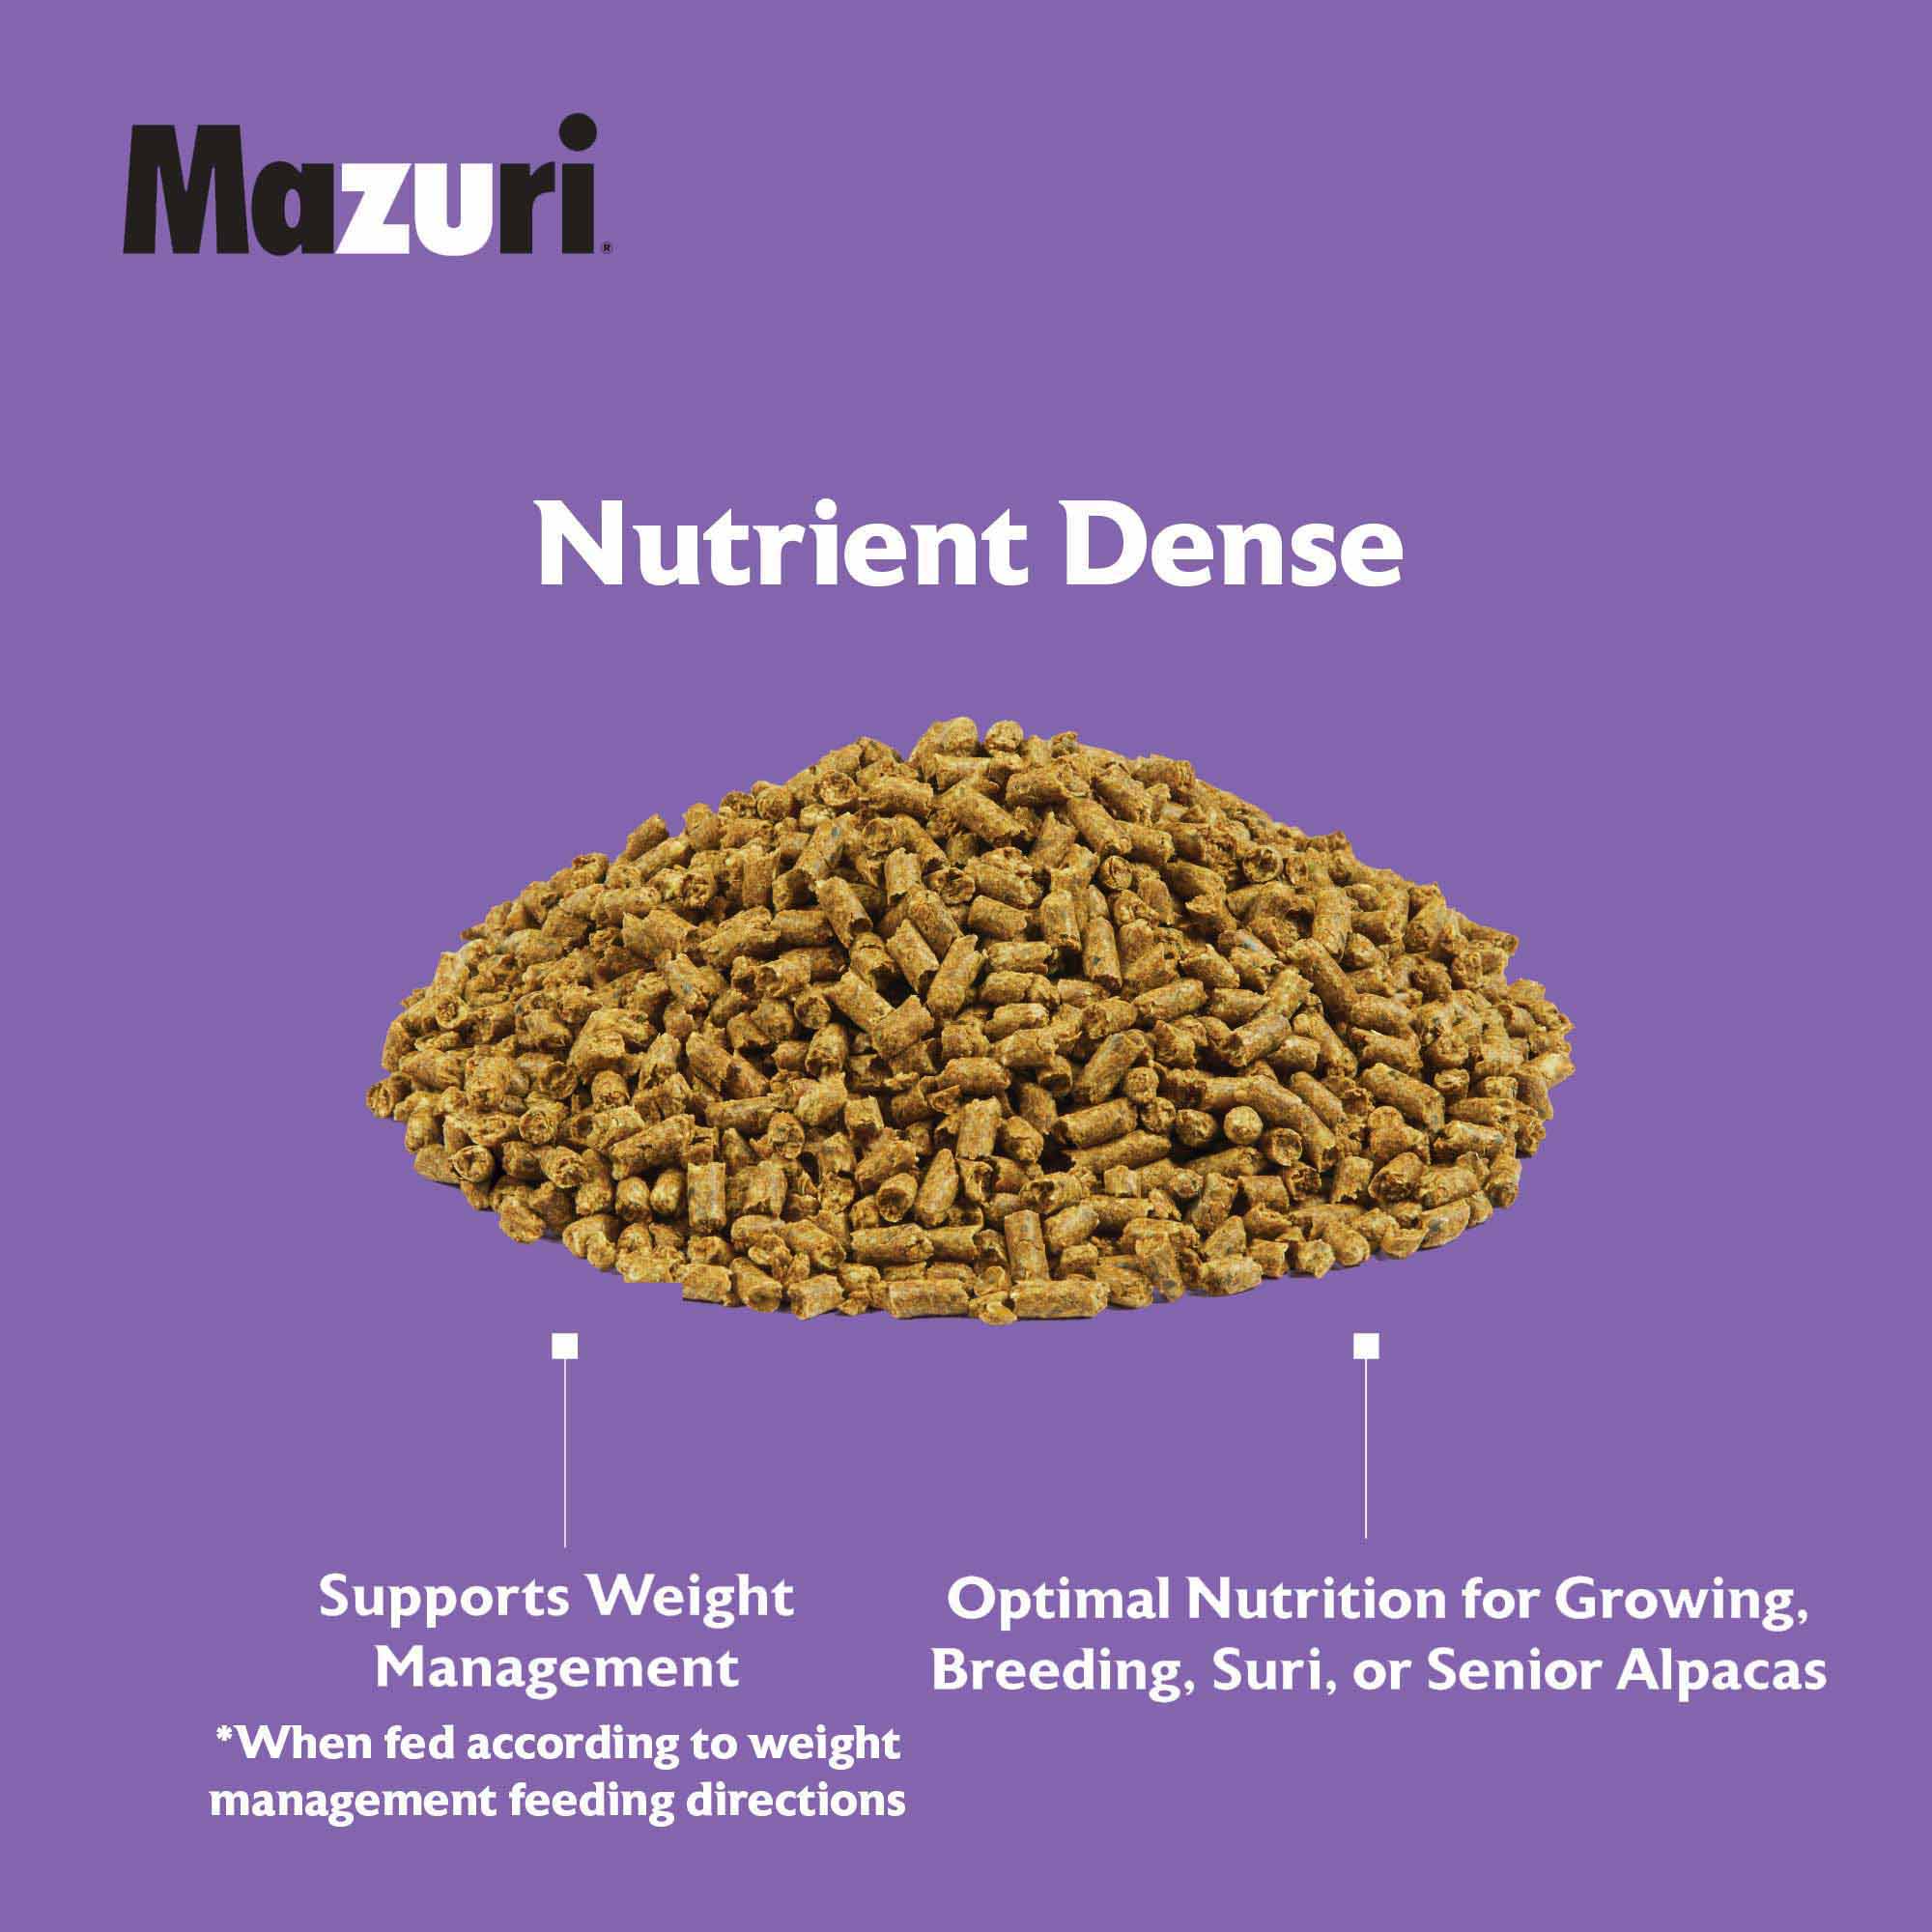 Nutrient Dense pellet on a purple background